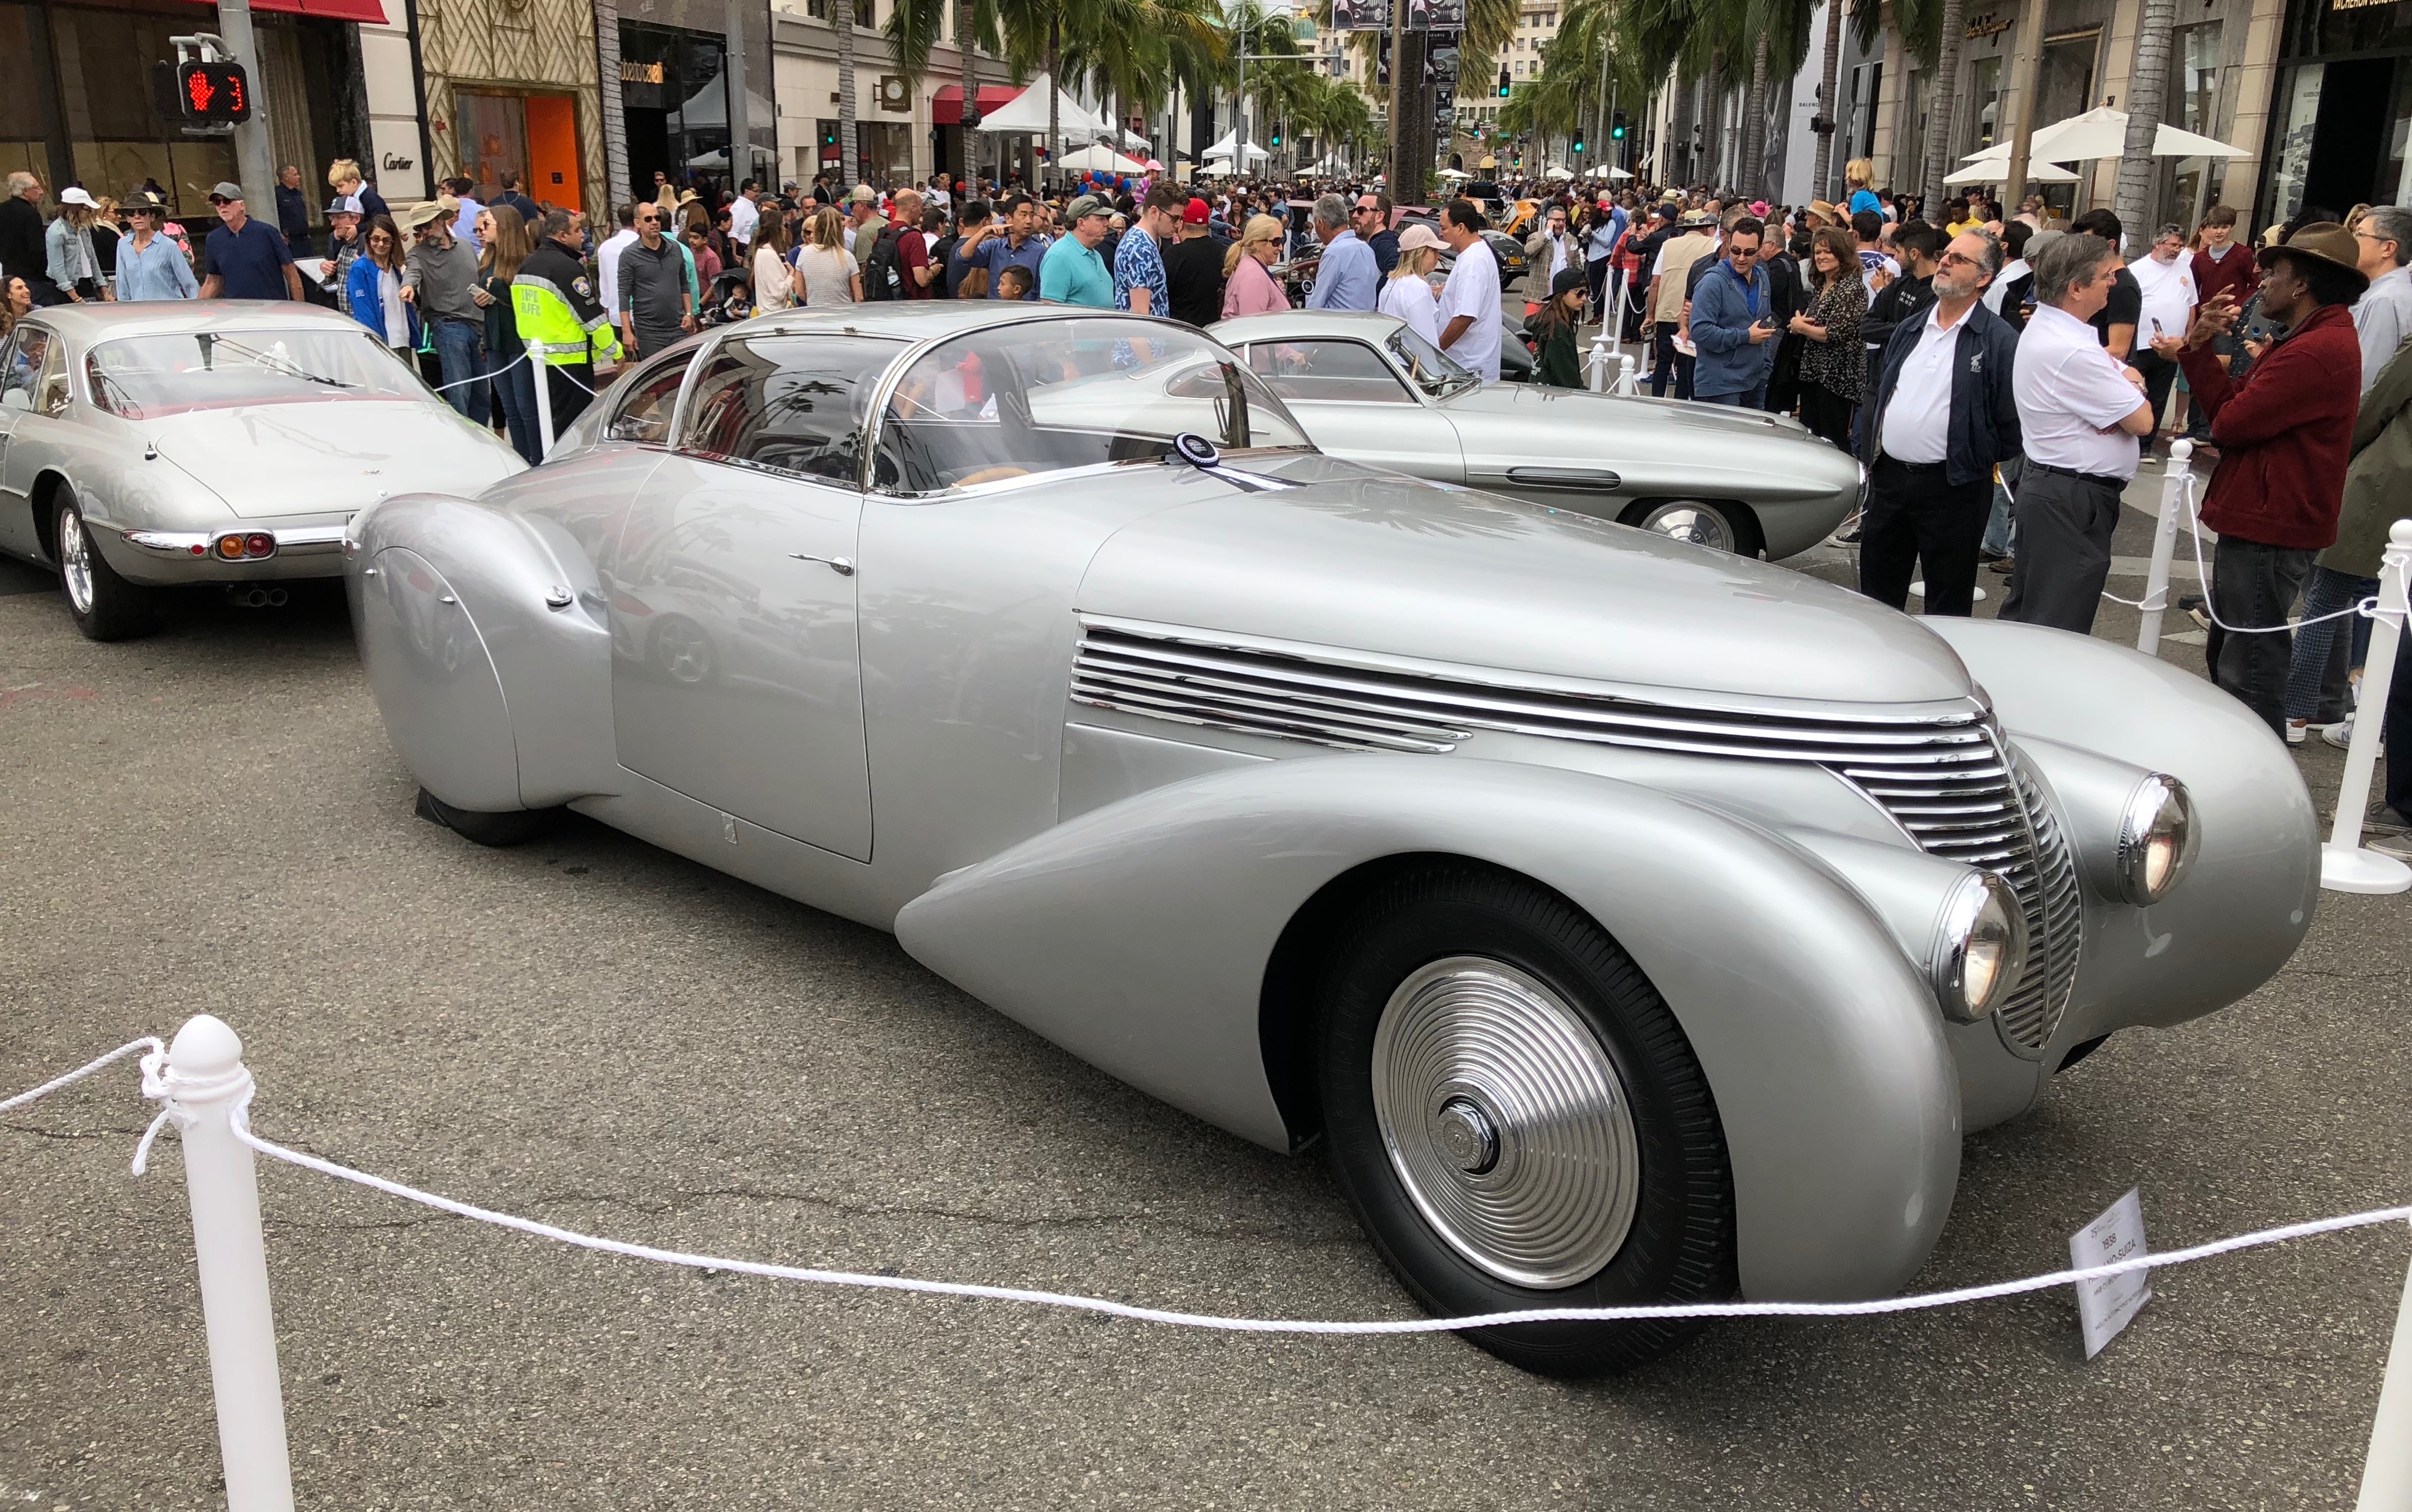 Hispano Suiza, Hispano Suiza plans automotive return with Carmen, ClassicCars.com Journal